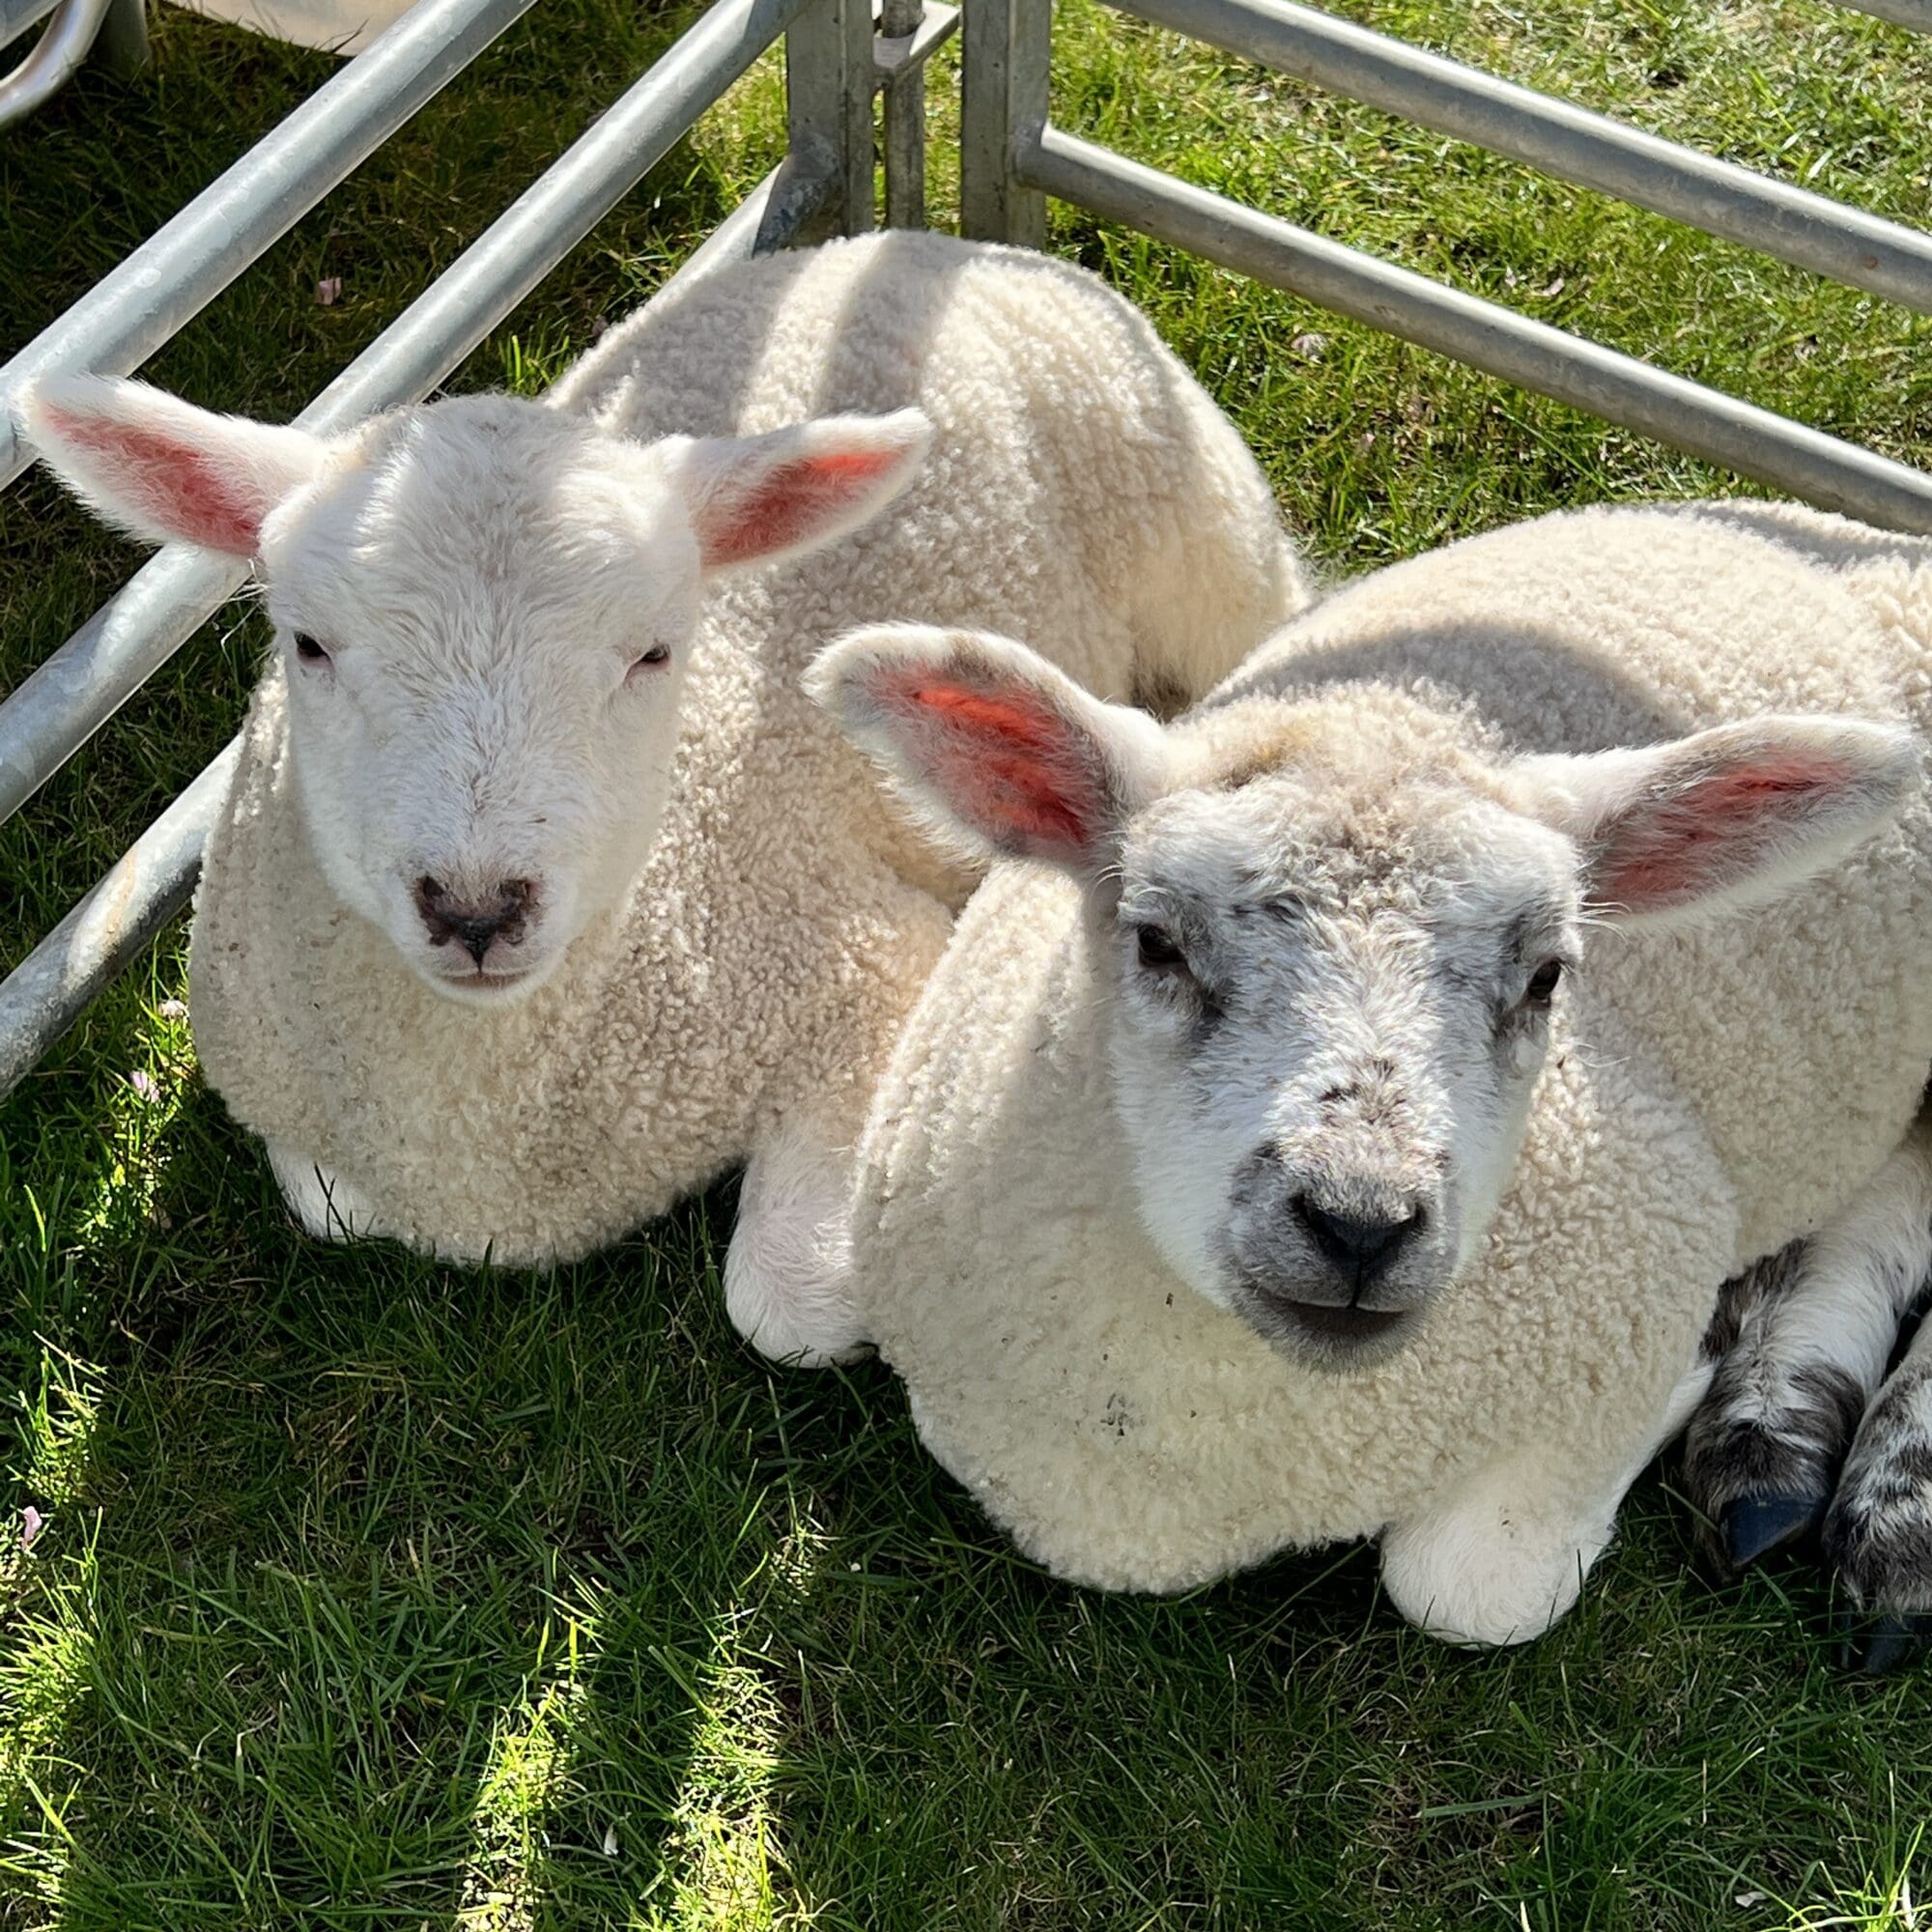 2 lambs sat on the grass